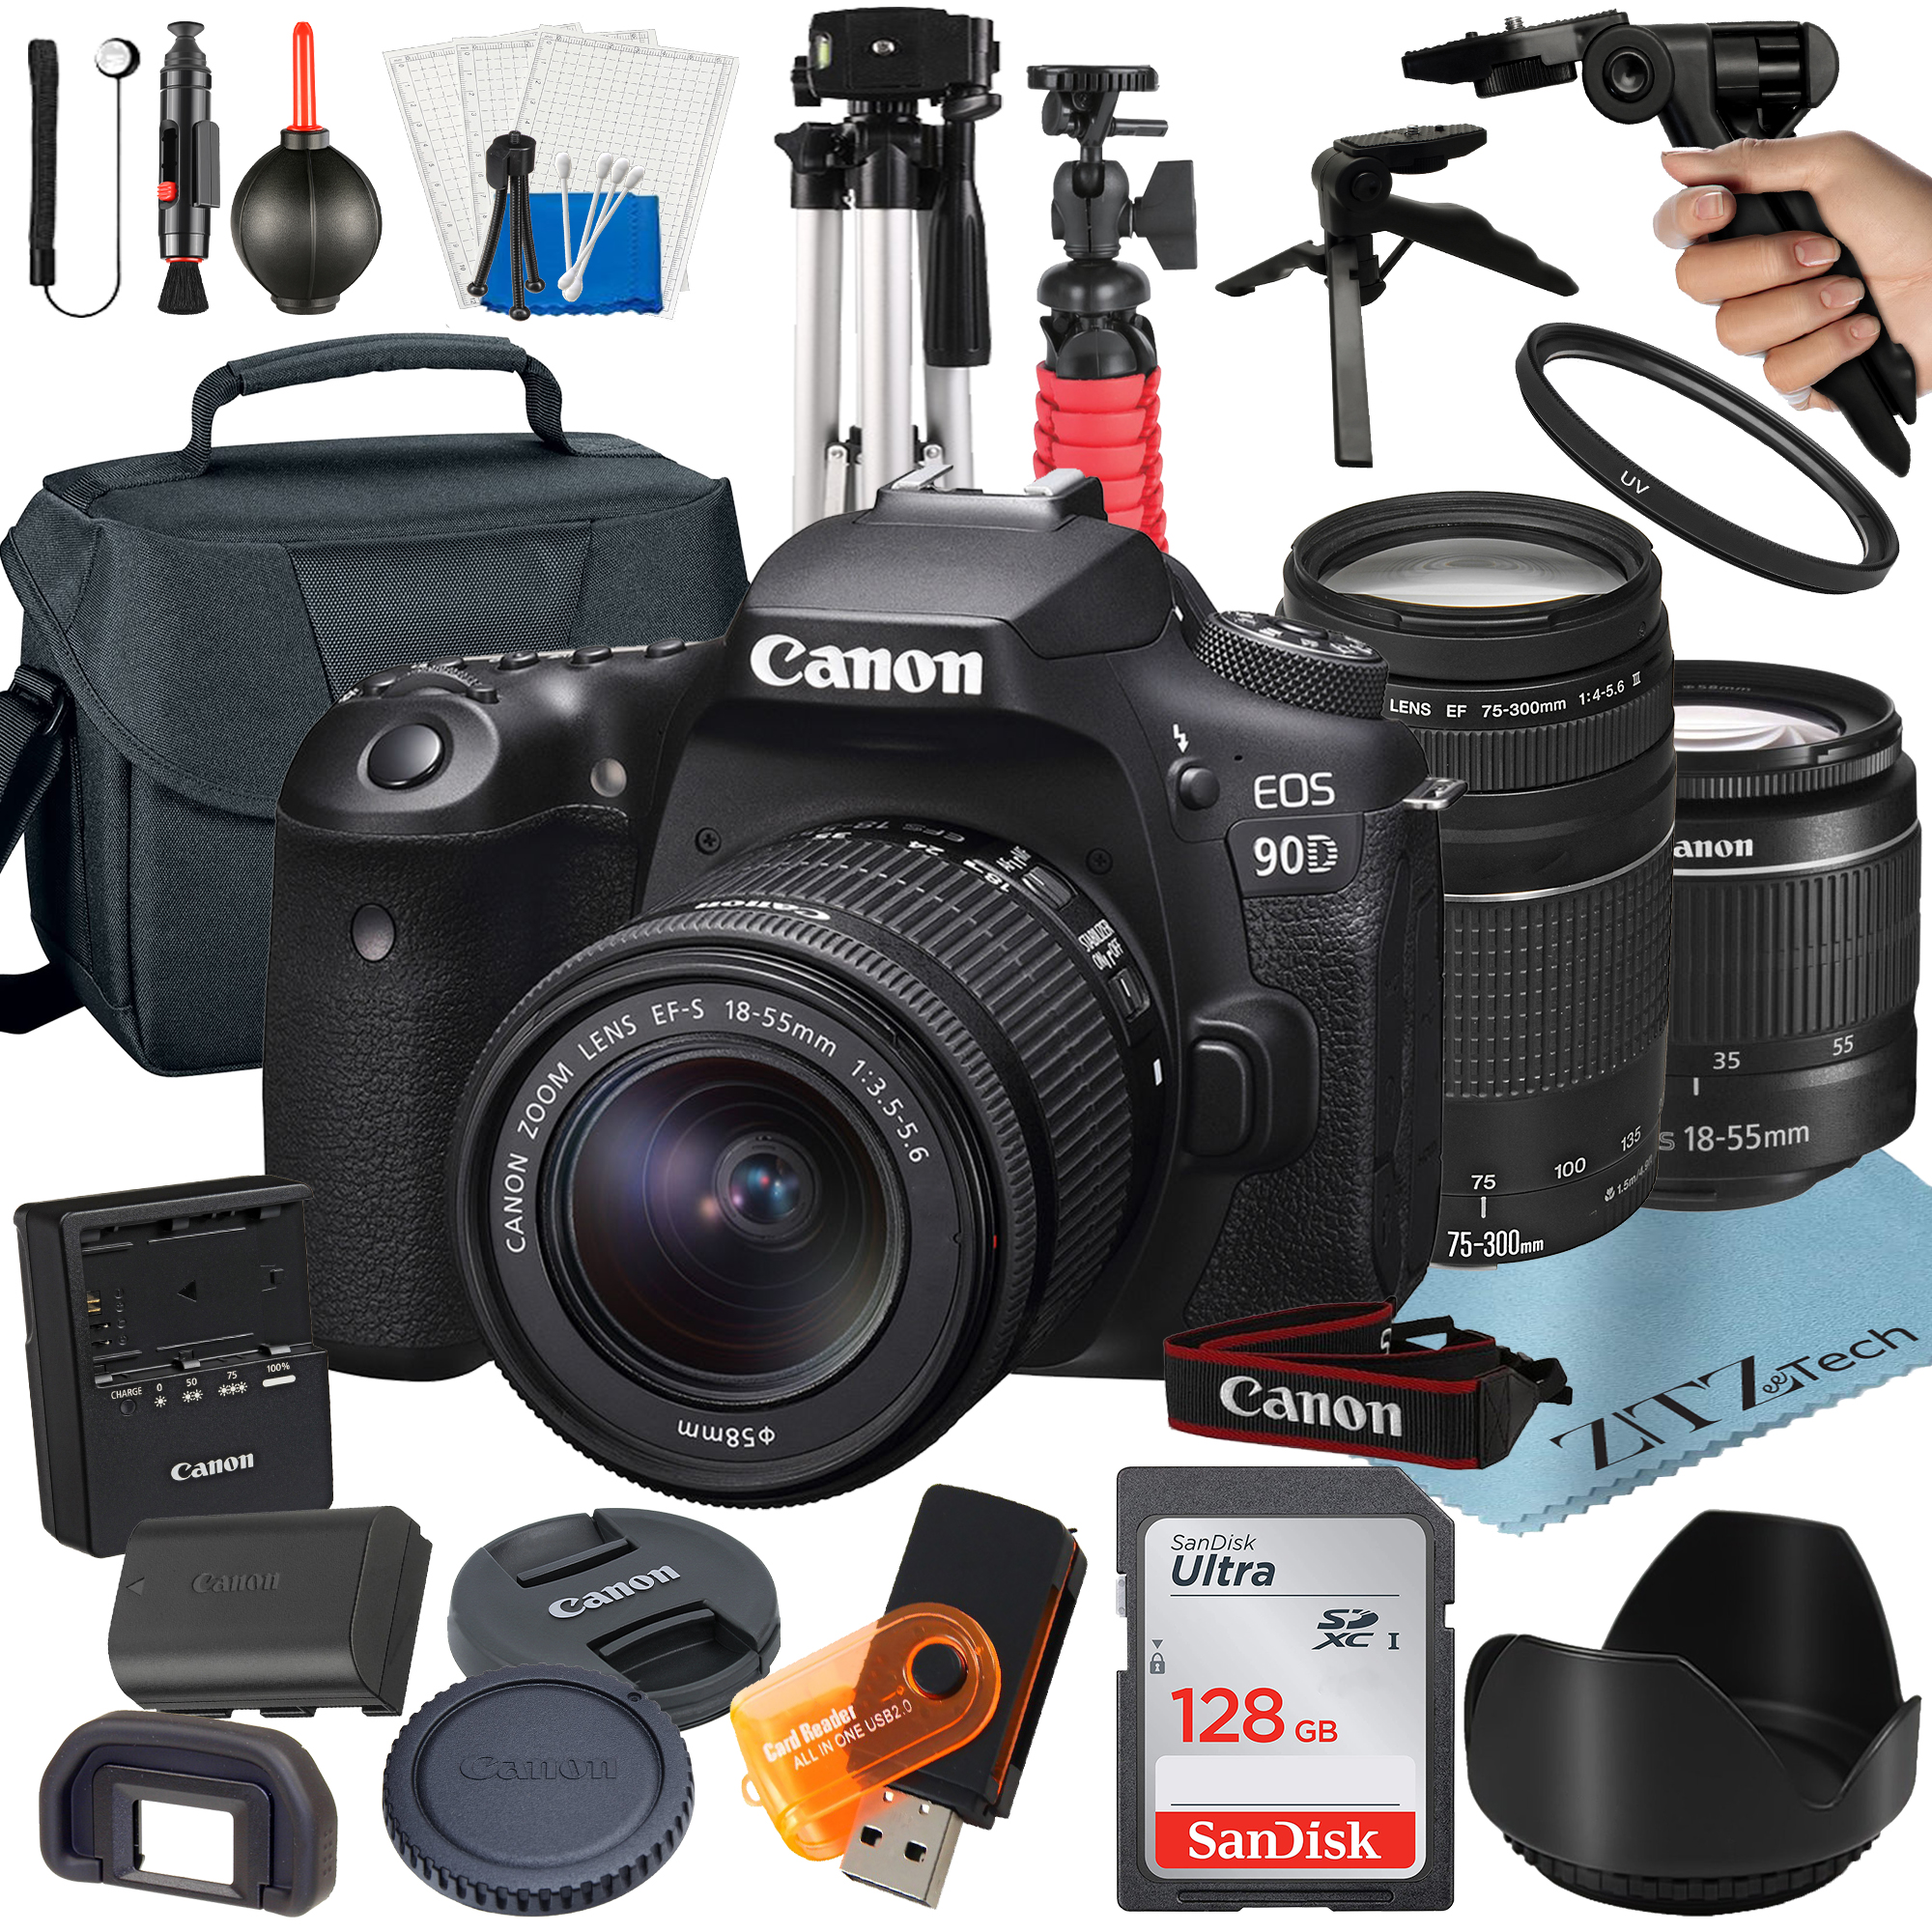 Canon EOS 90D DSLR Camera Bundle with 18-55mm + 75-300mm Lens + 128GB SanDisk Card + Case + Tripod + ZeeTech Accessory